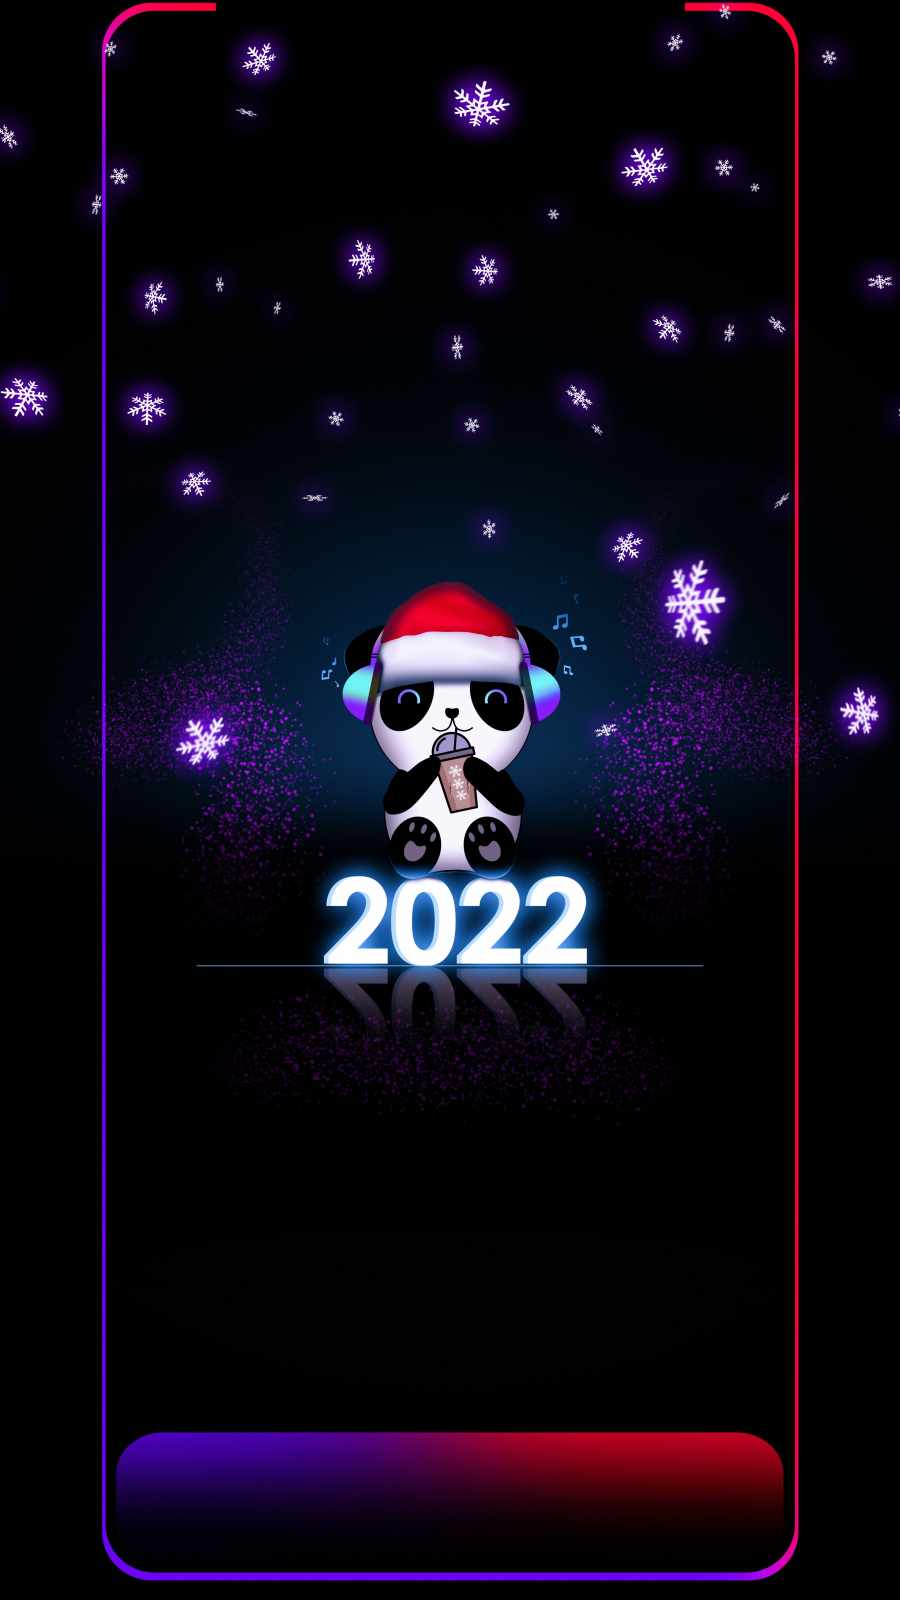 2022 New Year Christmas Celebration iPhone Wallpaper